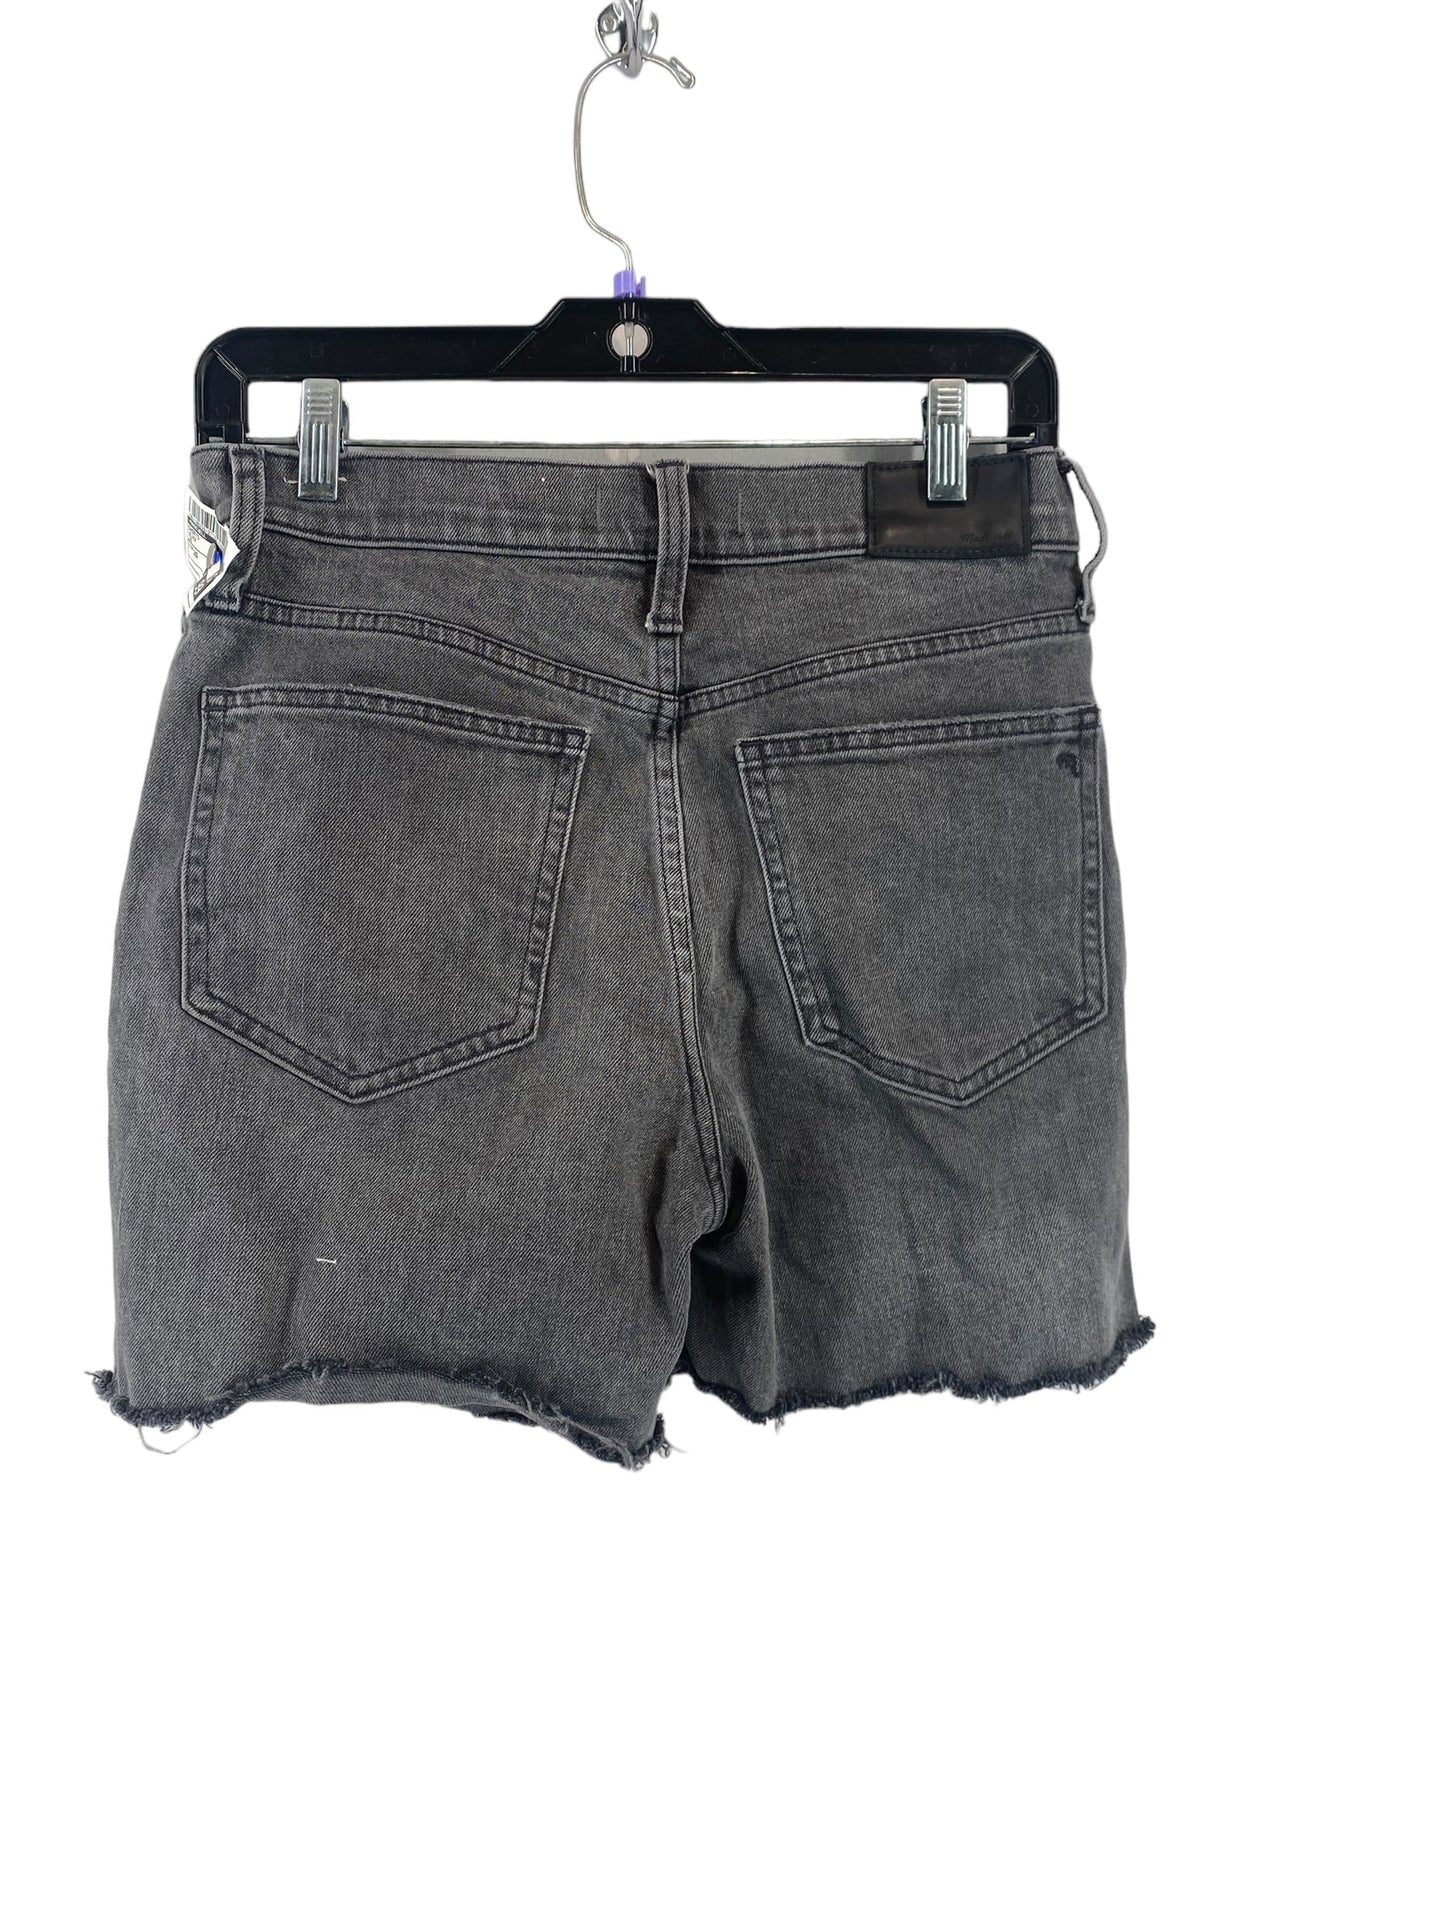 Black Shorts Madewell, Size 26